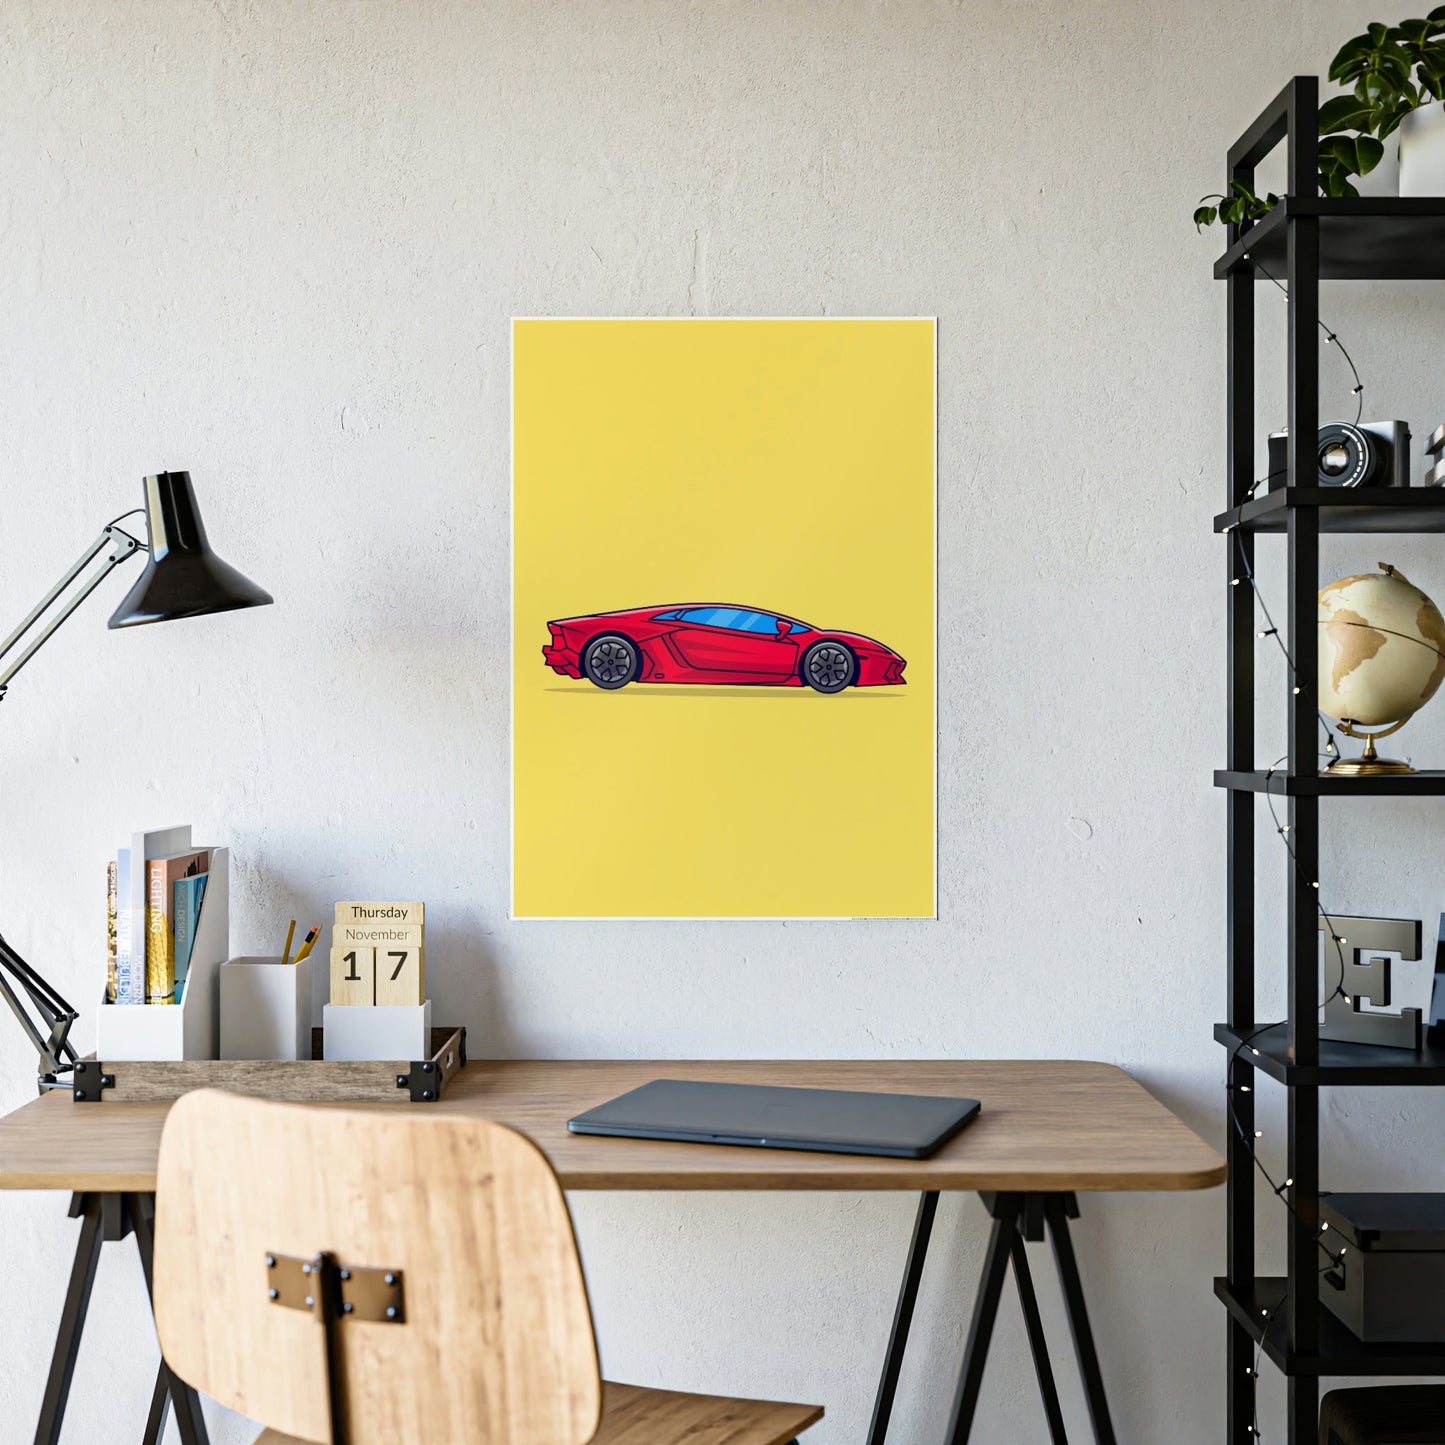 Vibrant Velocity: Red Lamborghini Canvas & Poster Print for Art Enthusiasts